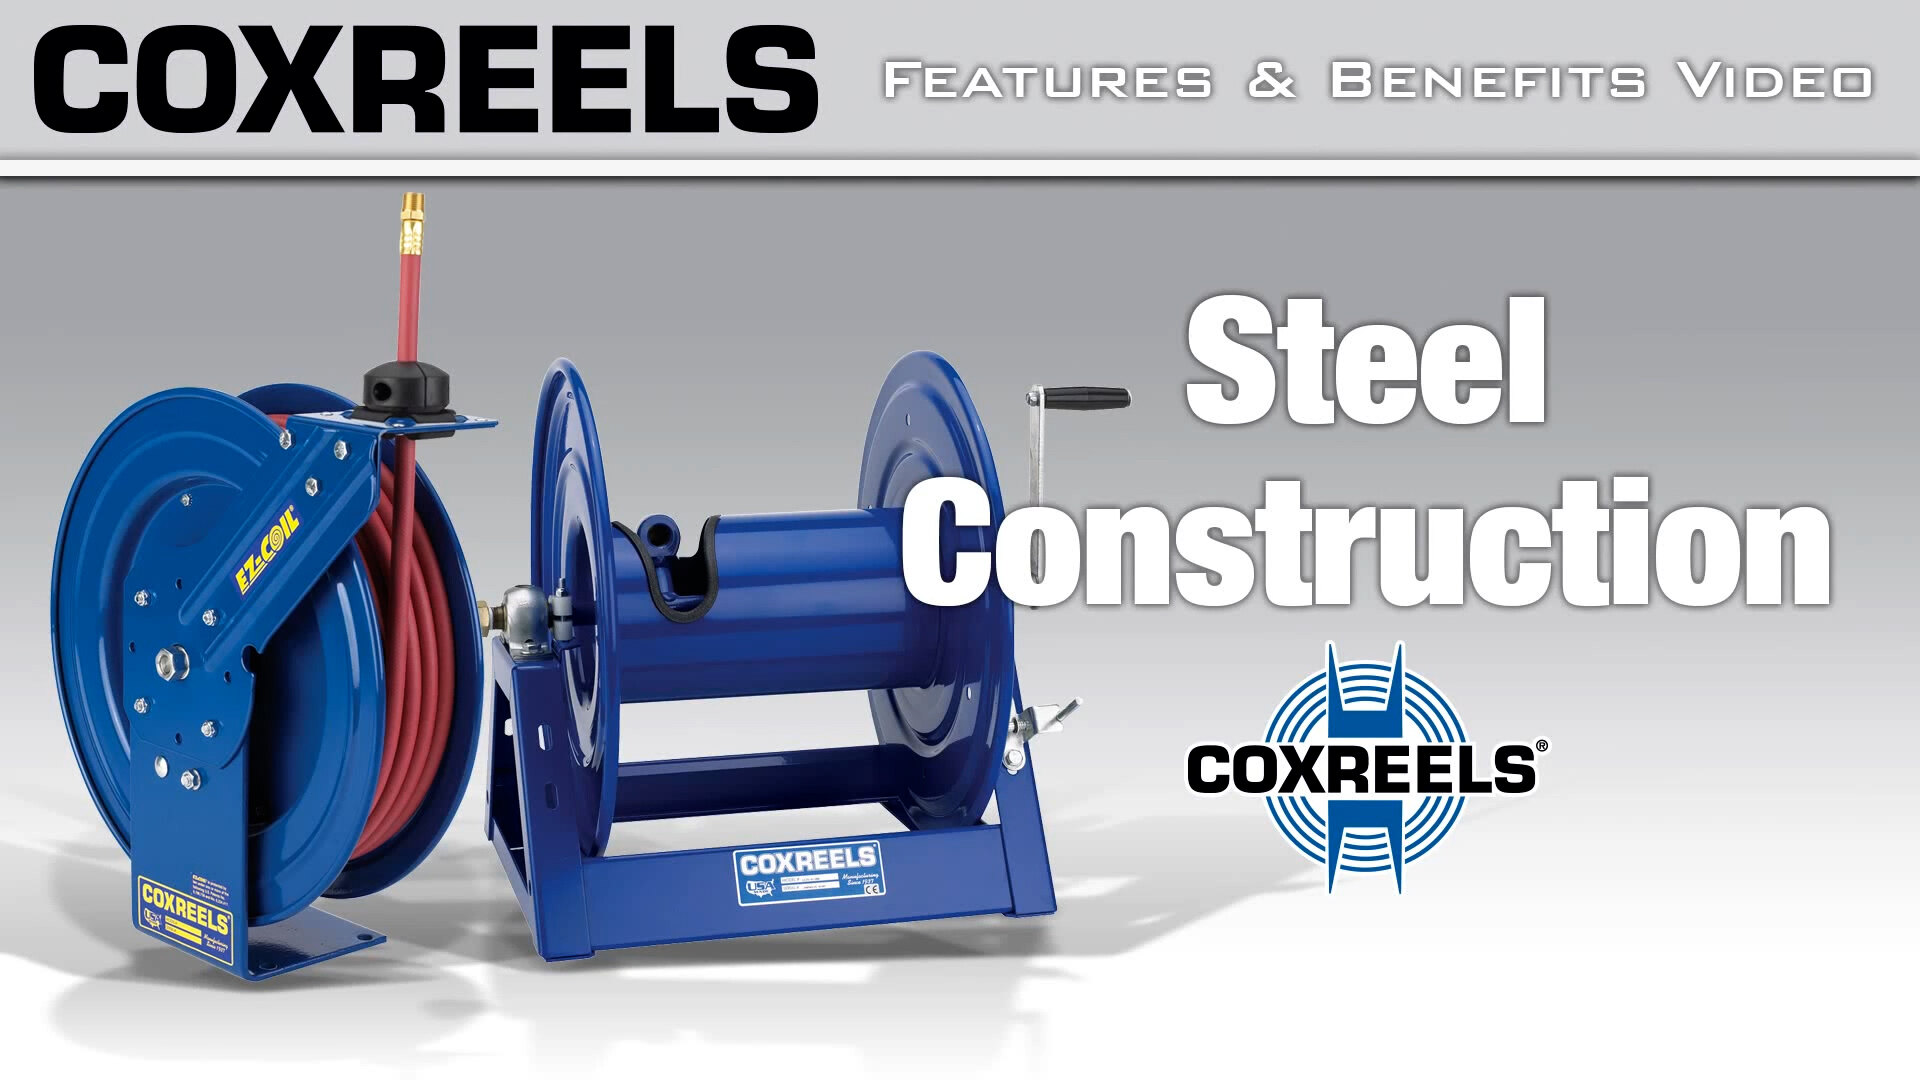 Coxreels Features & Benefits - Steel Construction Video